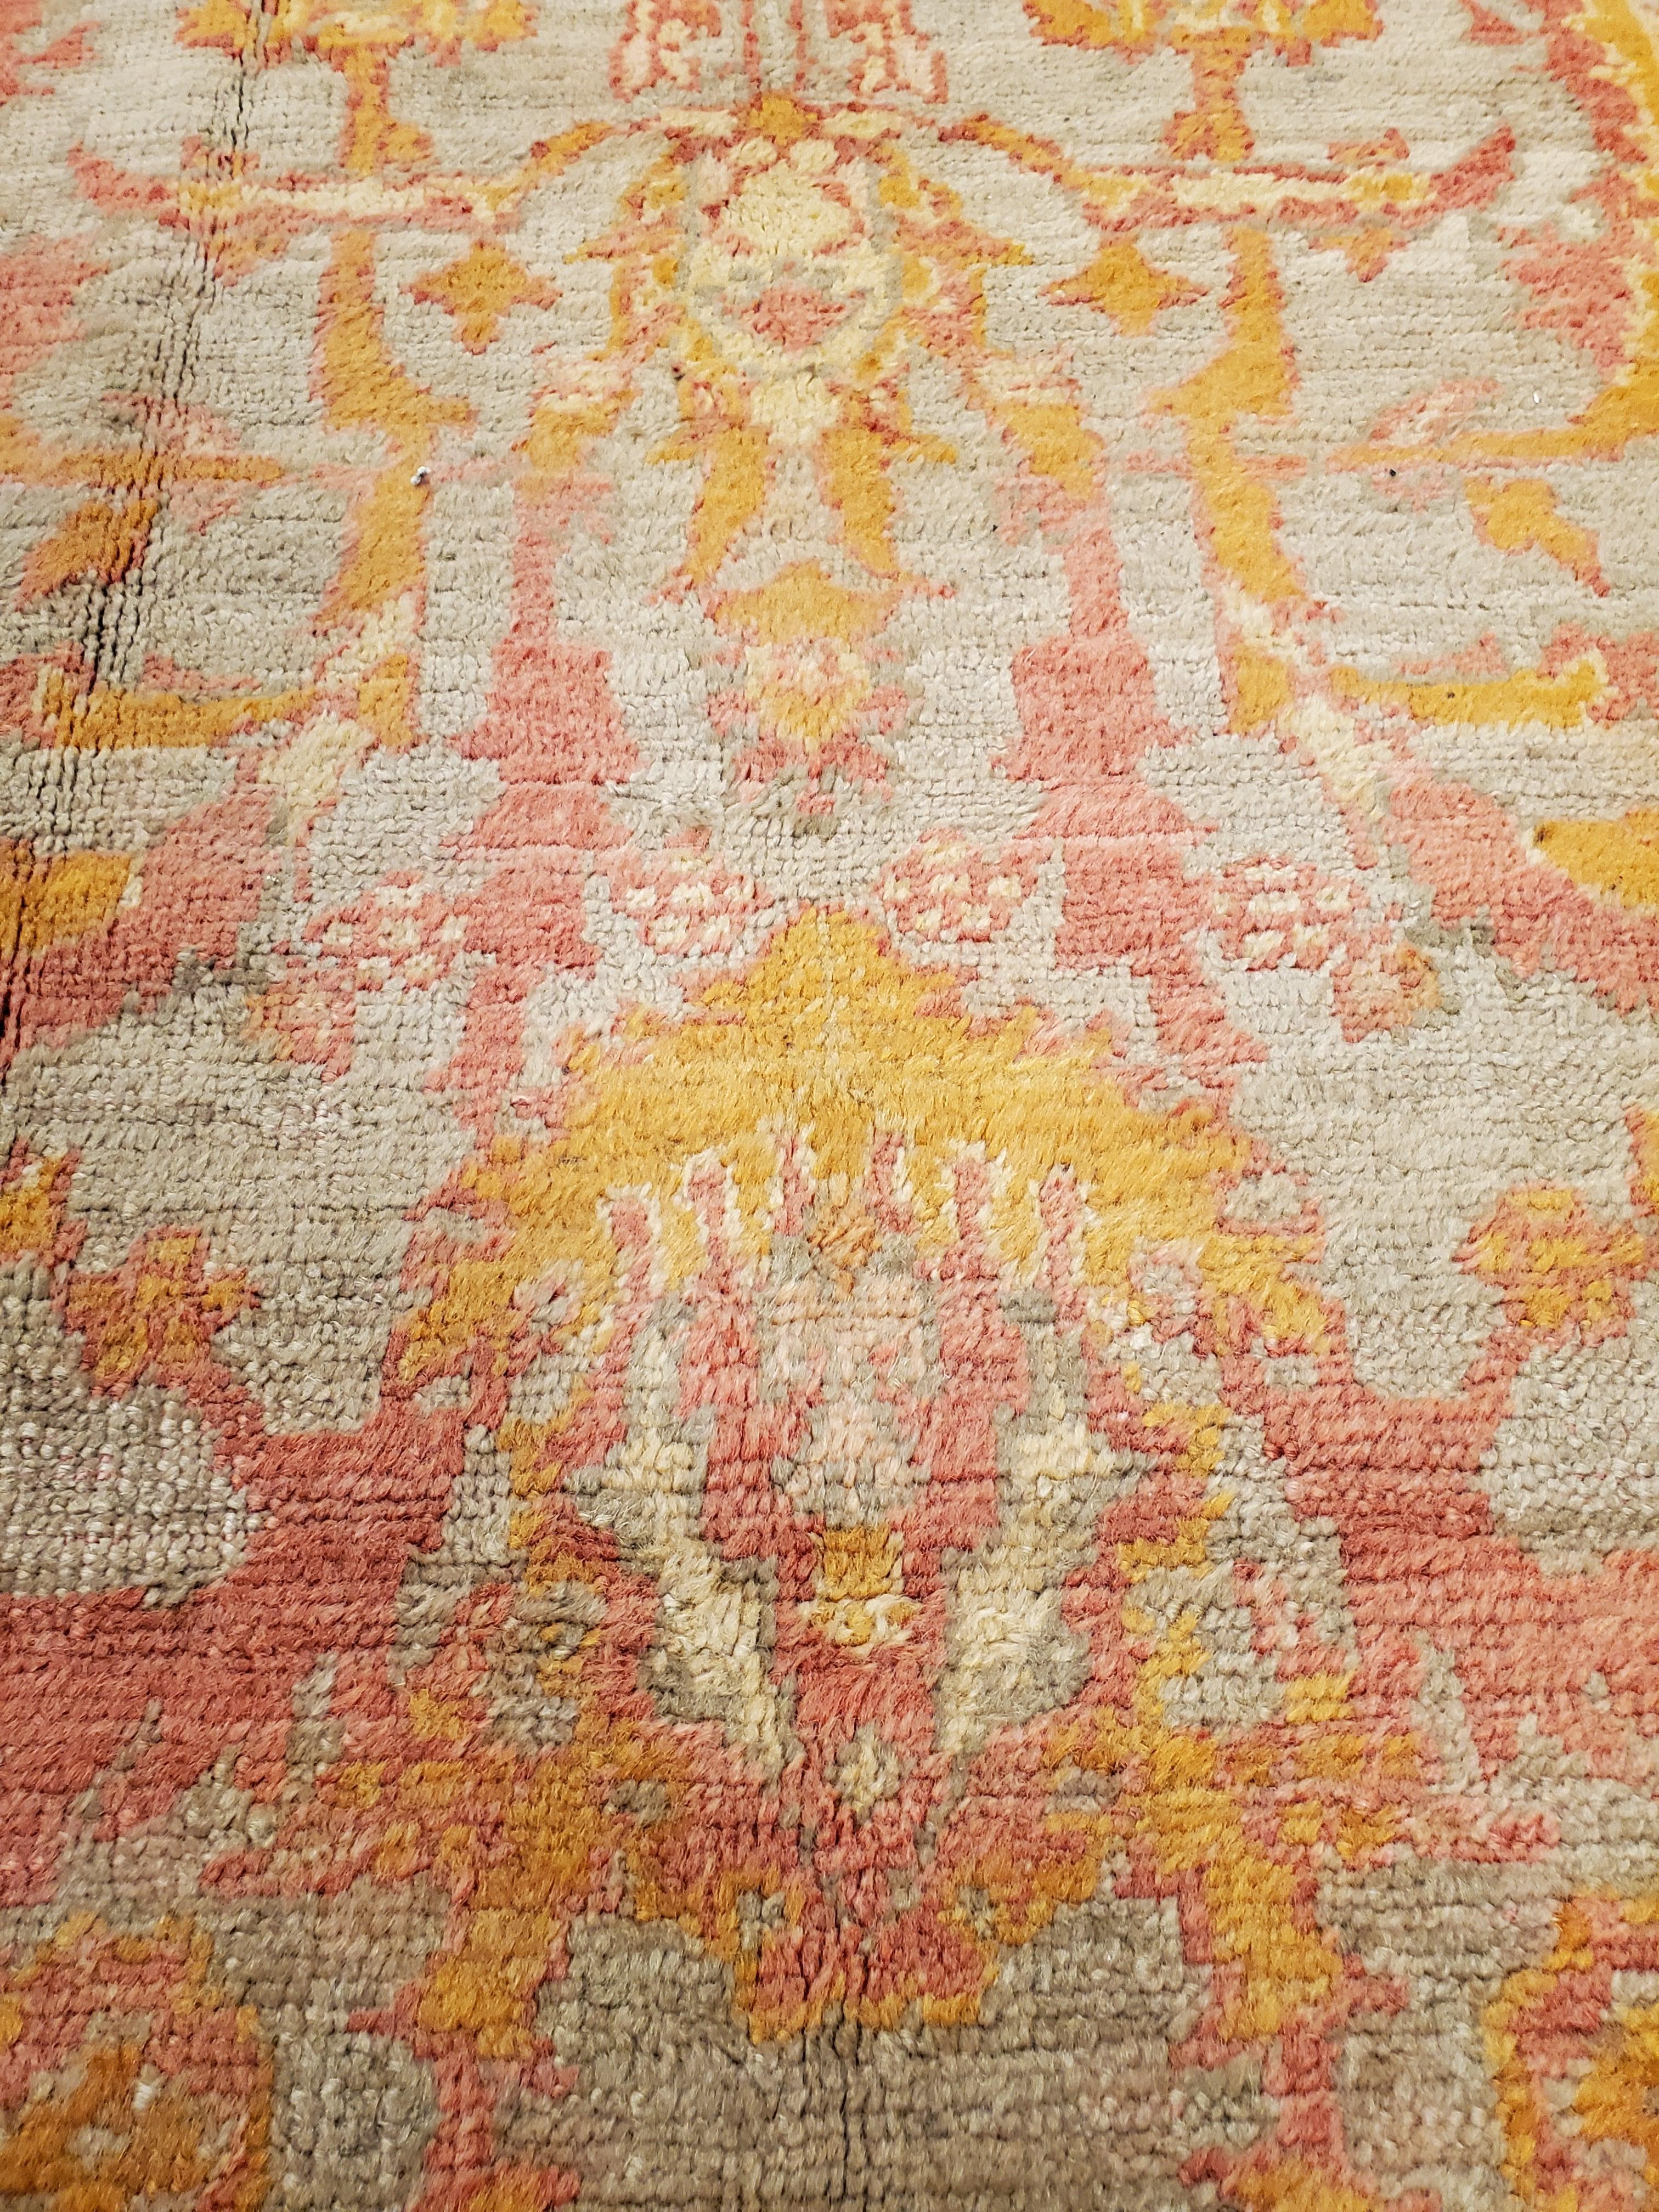 Antique Oushak Carpet, Handmade Turkish Oriental Rug, Saffron, Coral, Light Blue For Sale 4